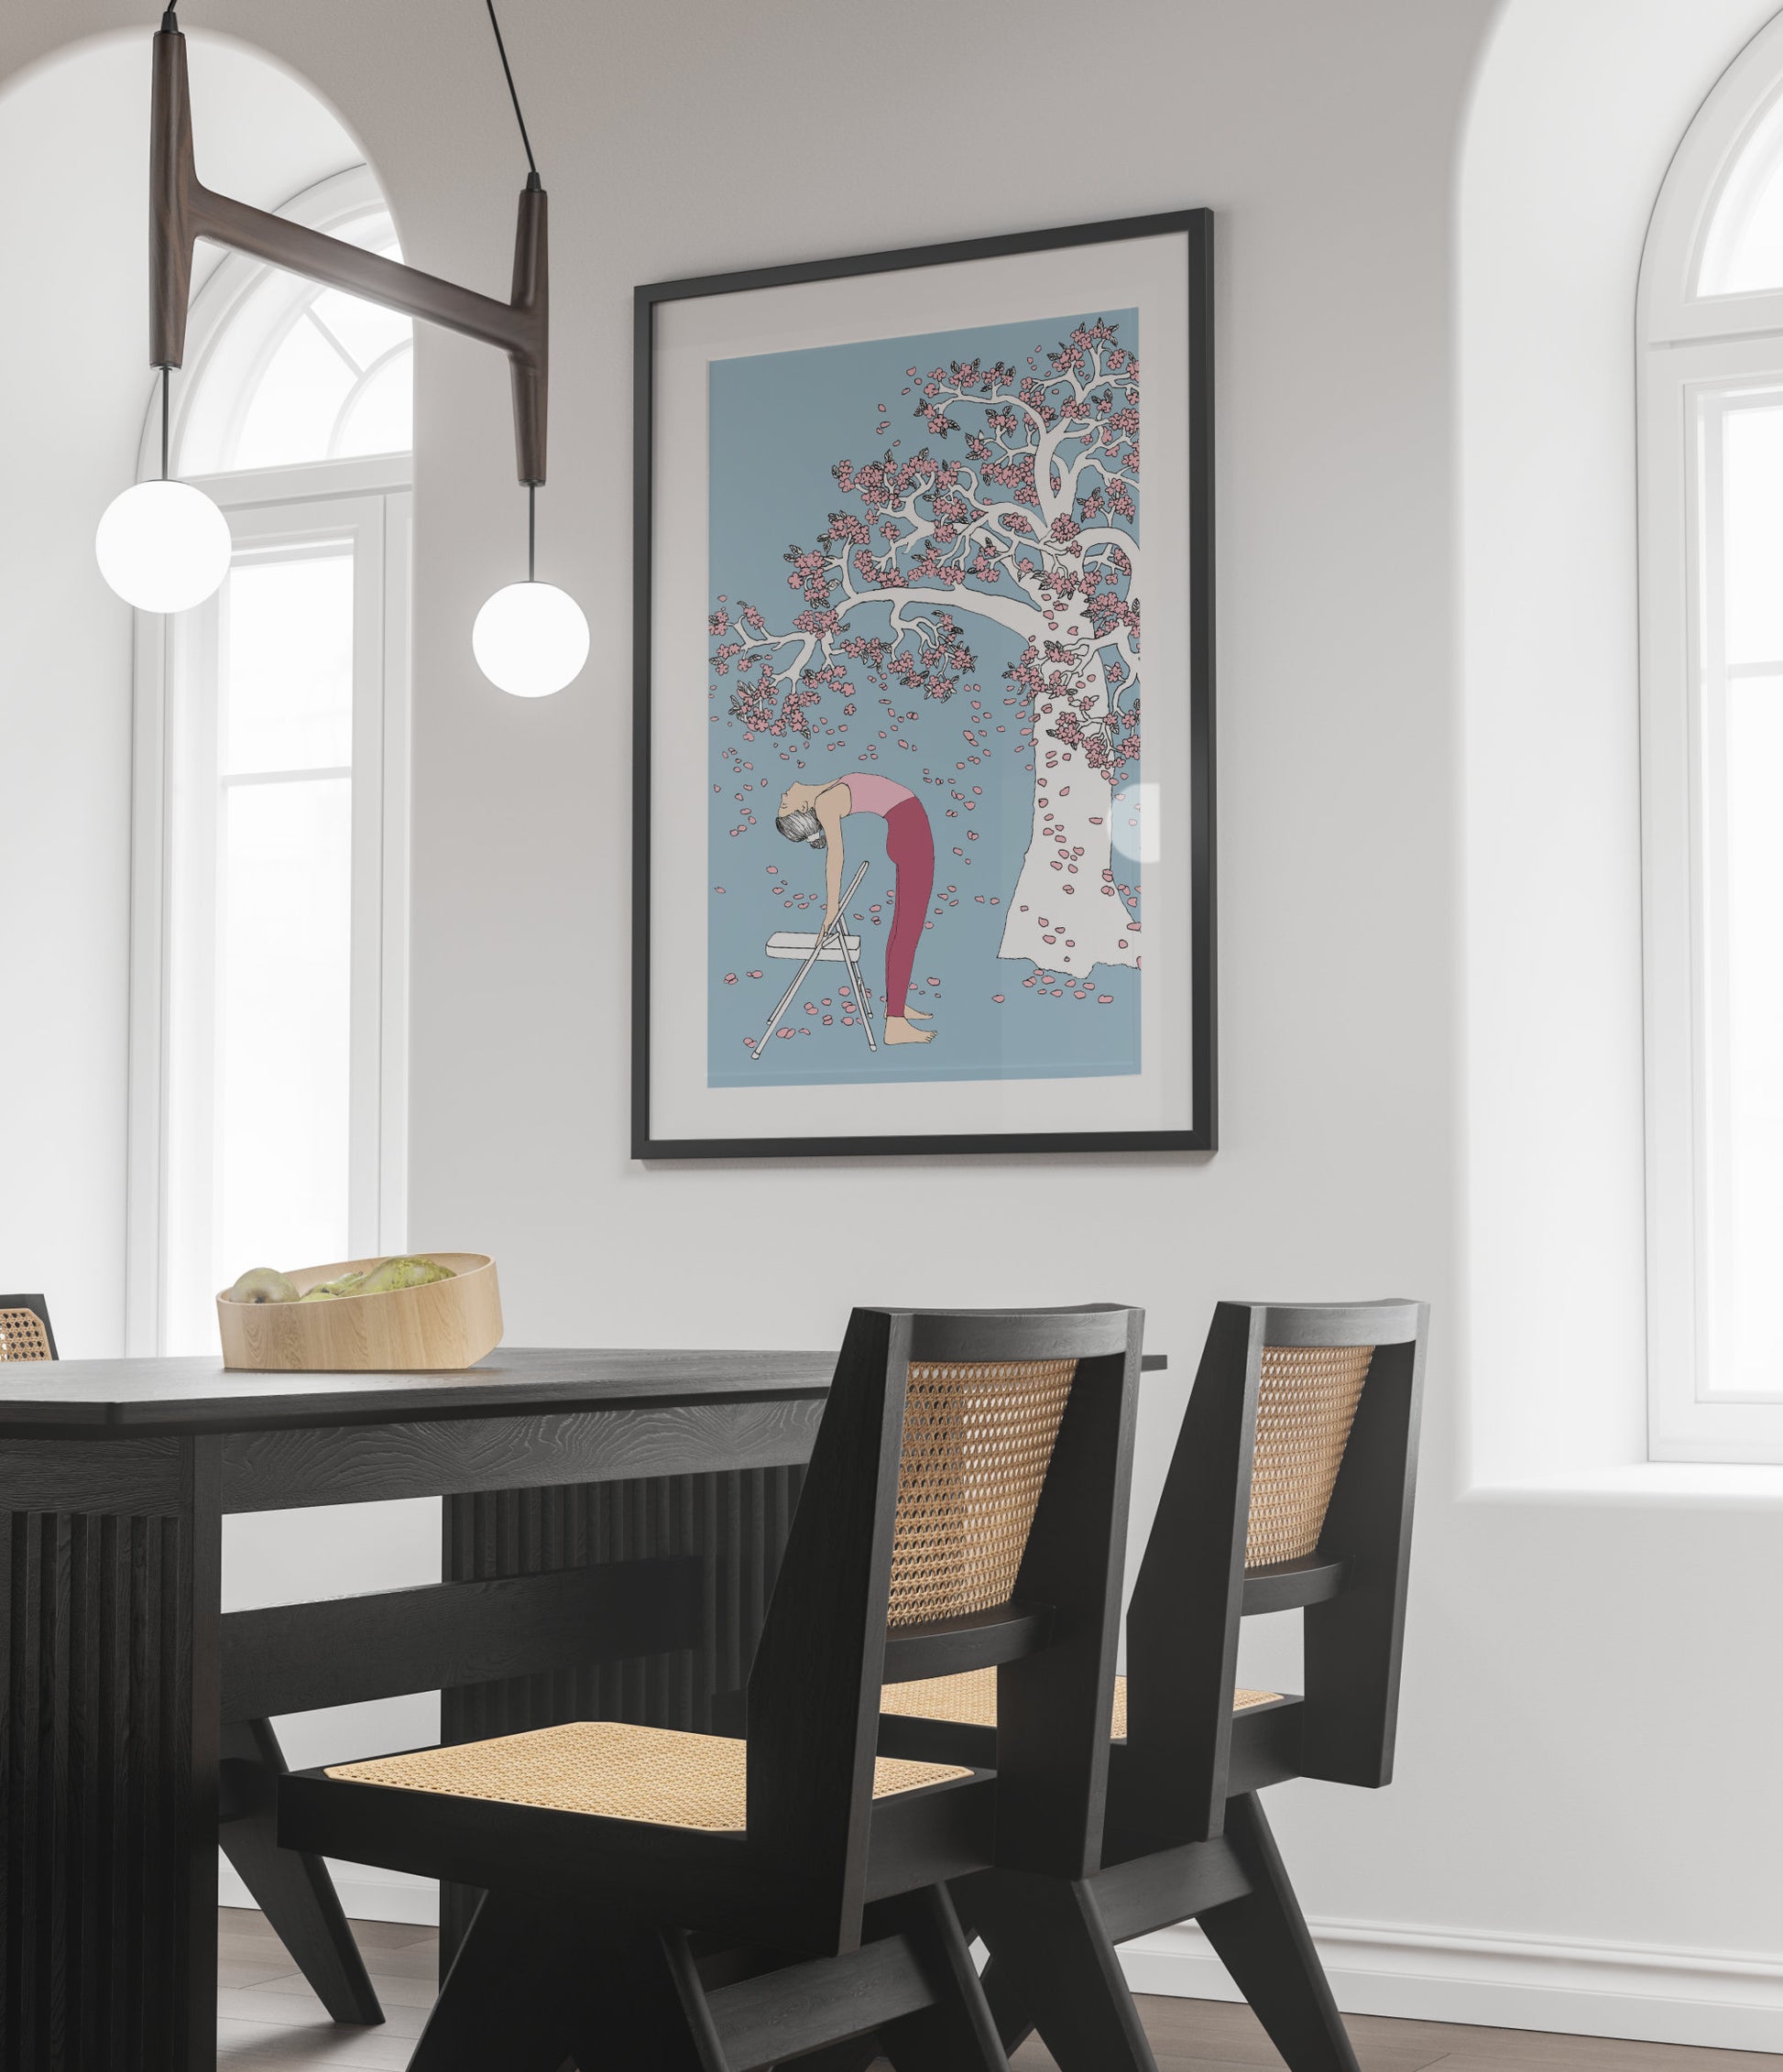 Svejar Yoga Art - Poster - Backbend Blossom Tree Mockup Living Room